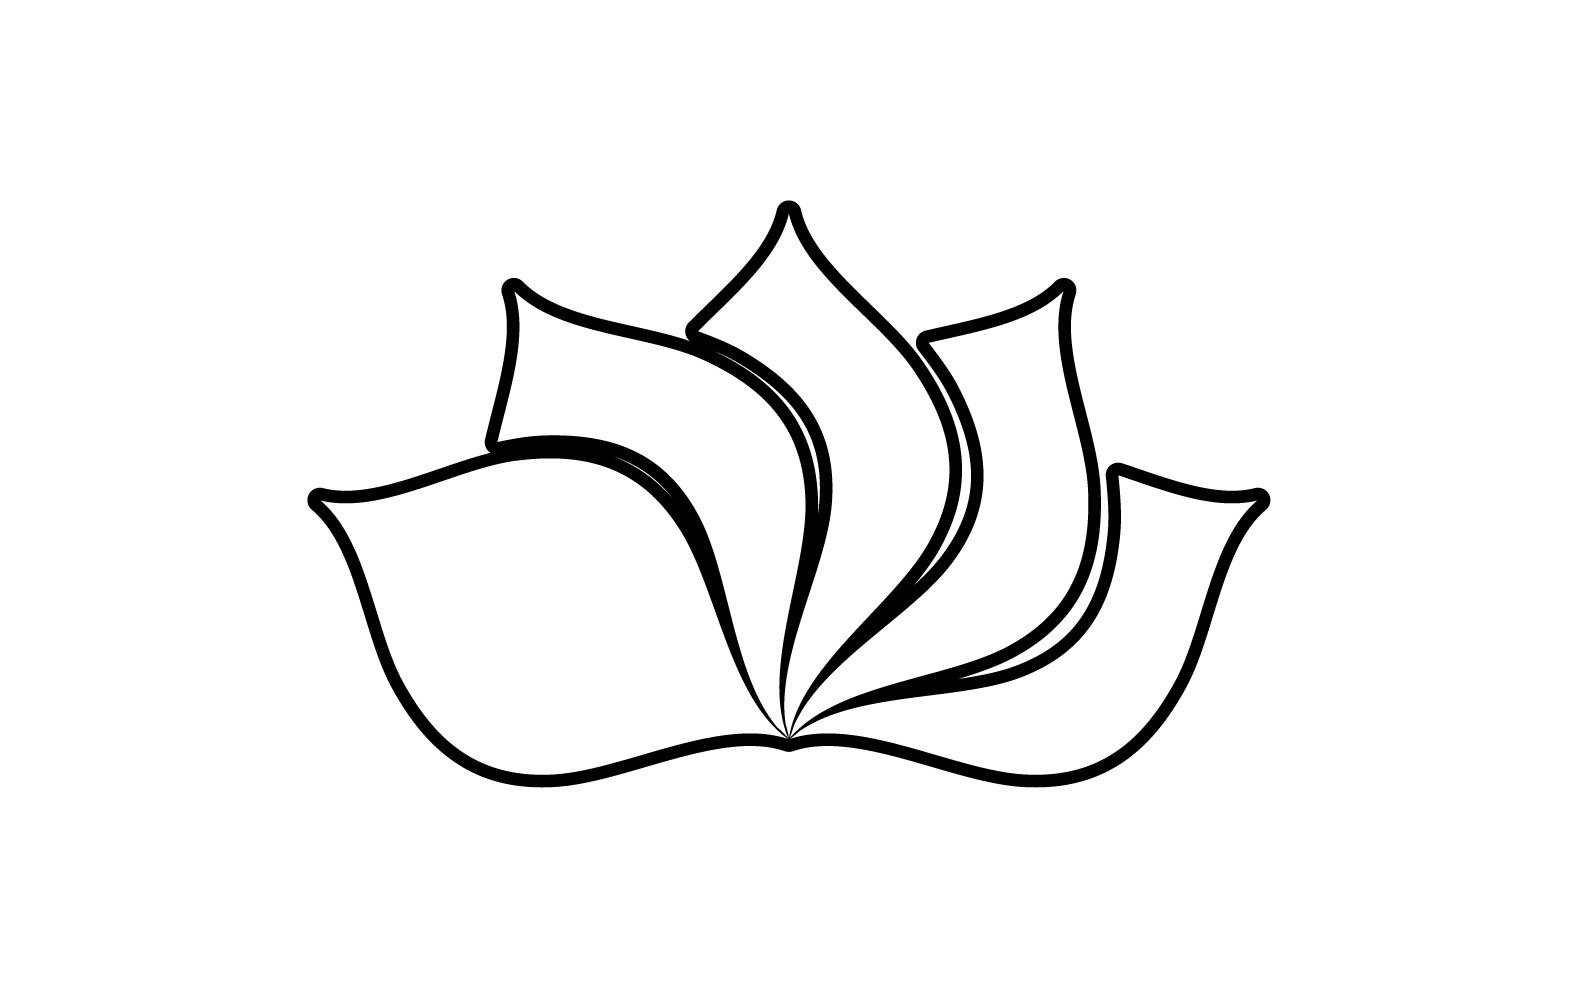 Flower lotus yoga symbol vector design company name v47